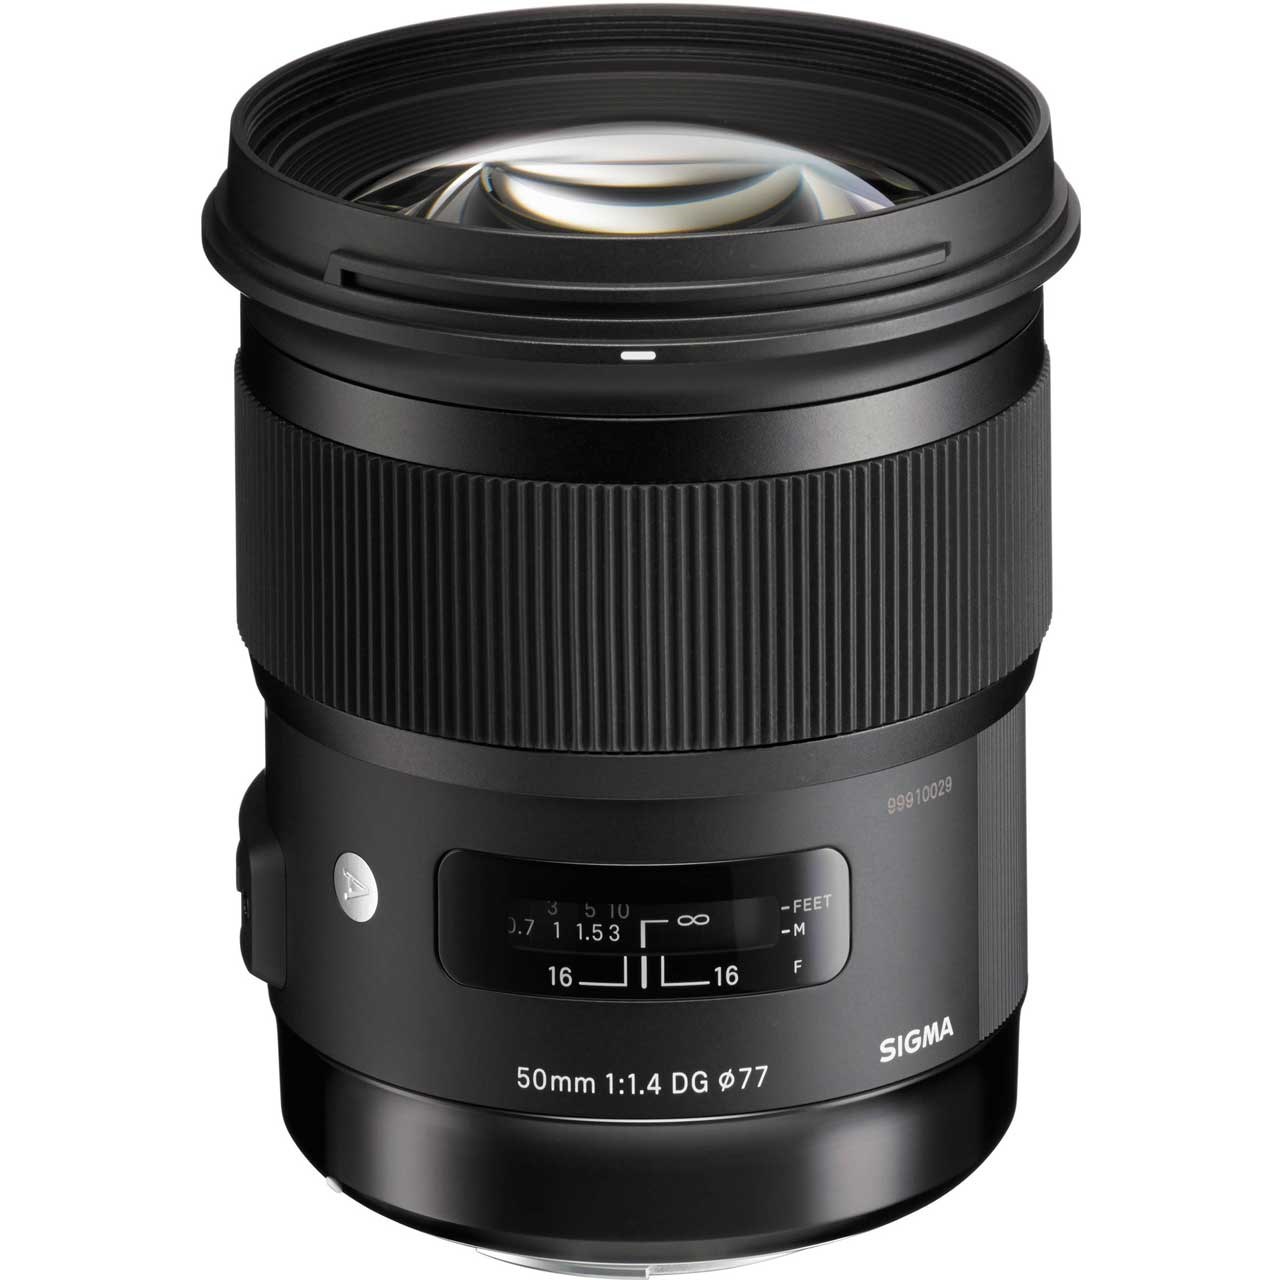 لنز سیگما مدل 50mm f/1.4 DG HSM Art for Nikon Cameras Lens